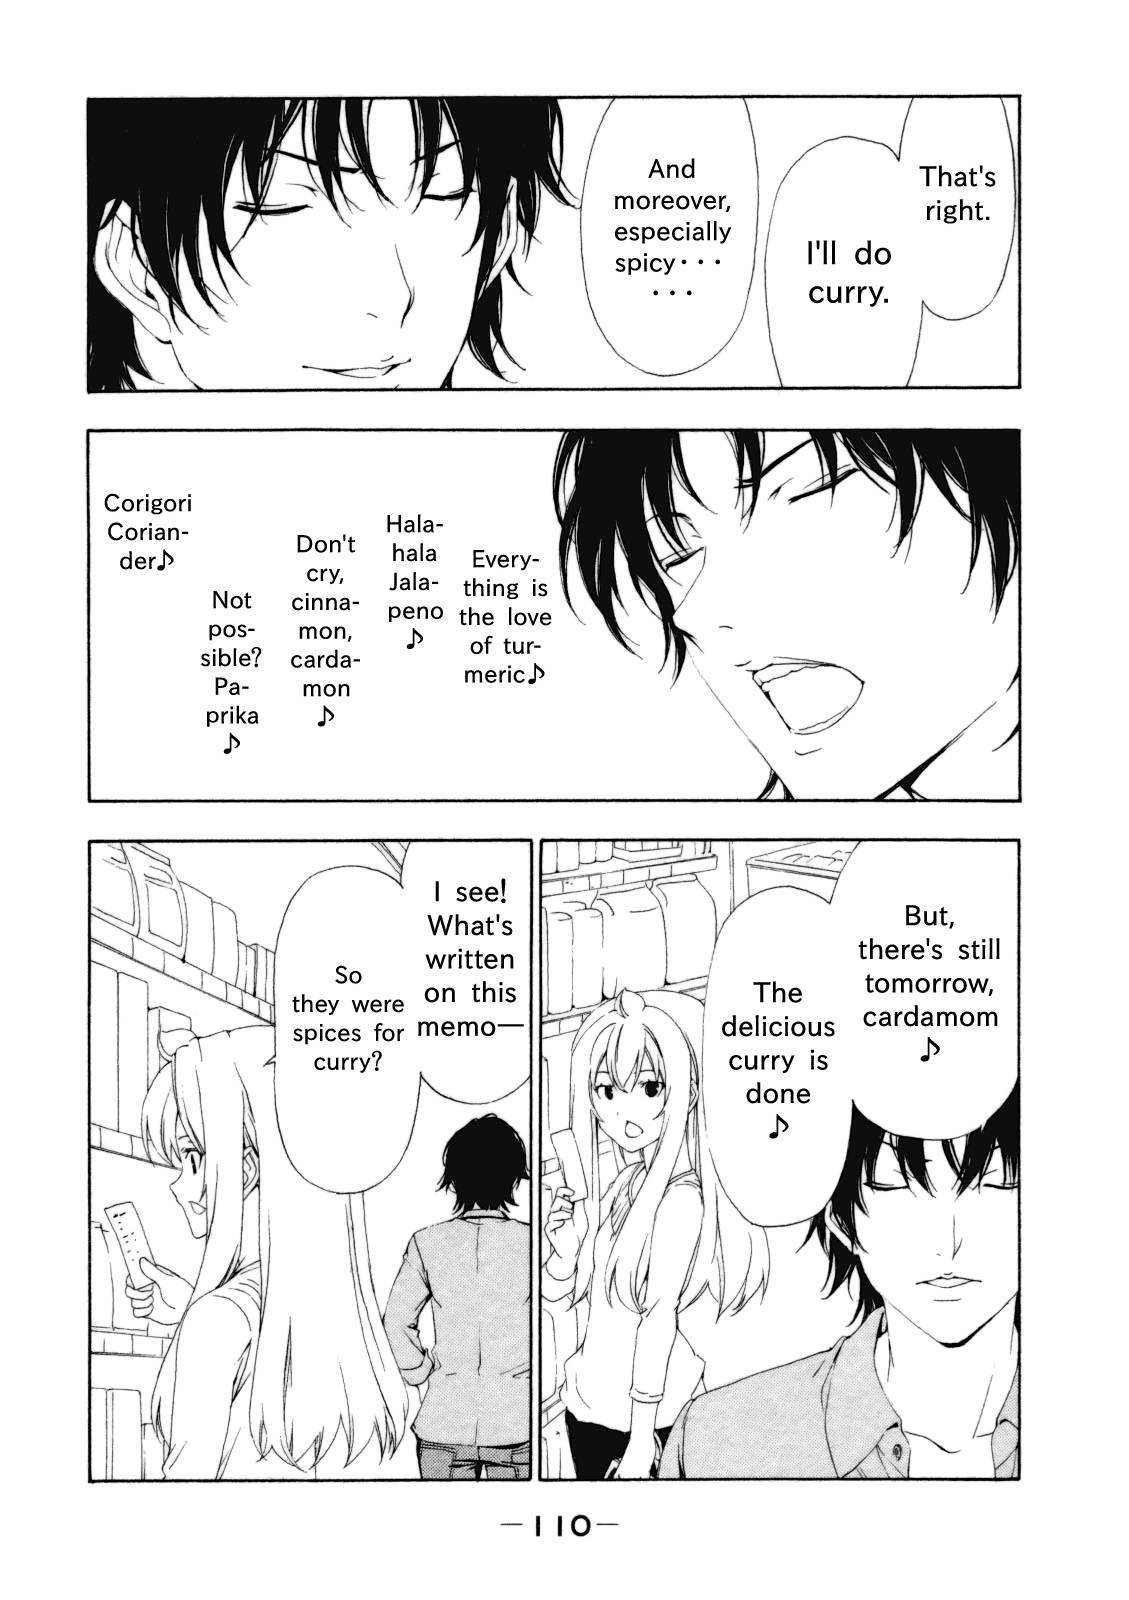 Minami-ke chapter 113 page 5